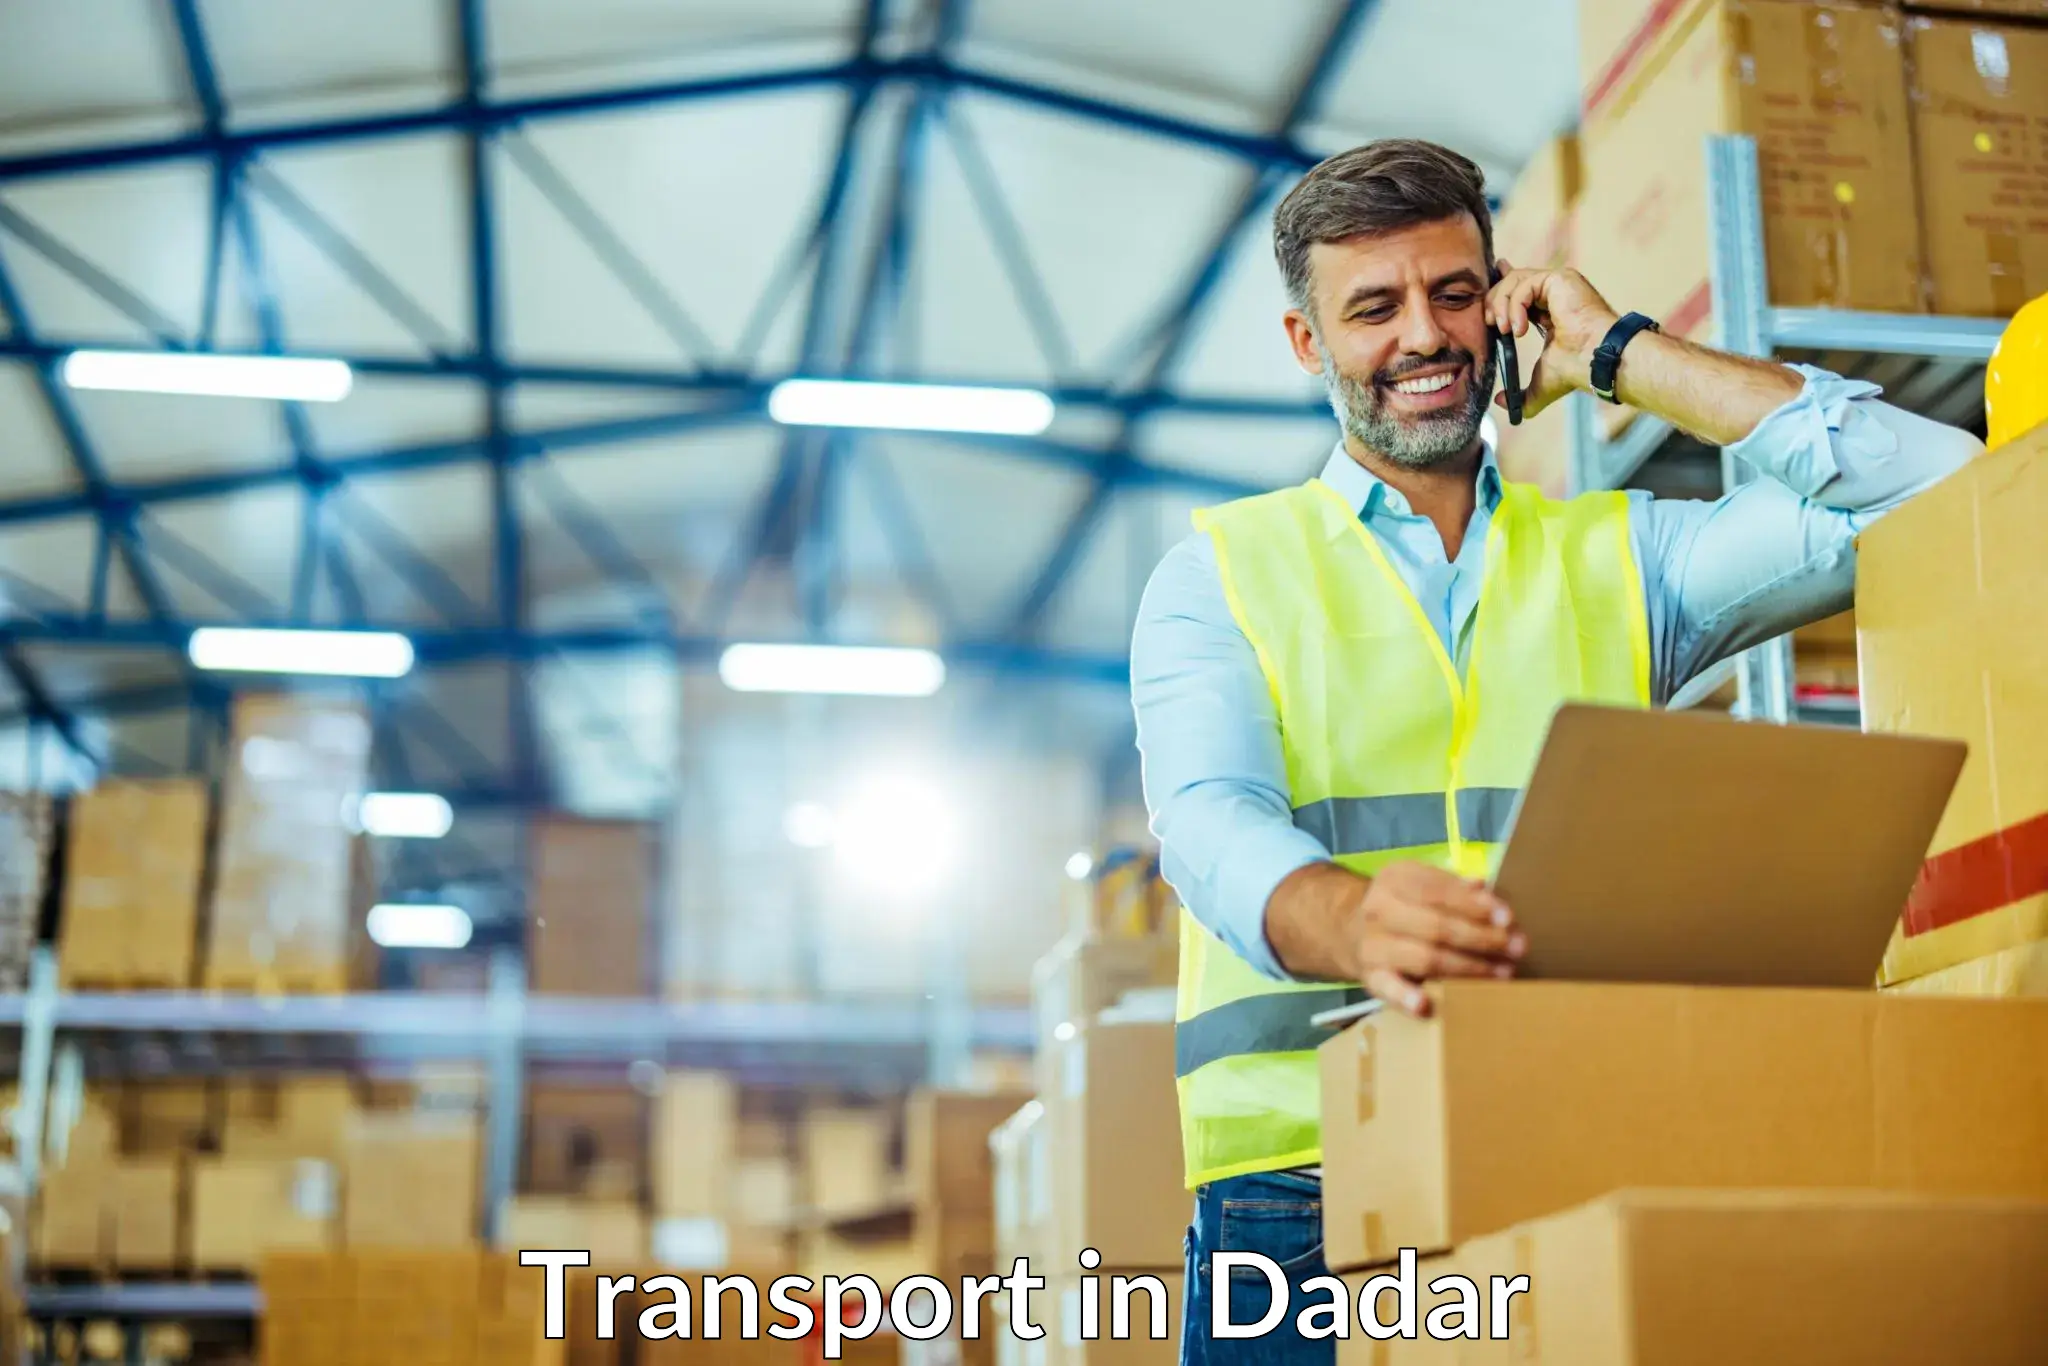 Shipping services in Dadar